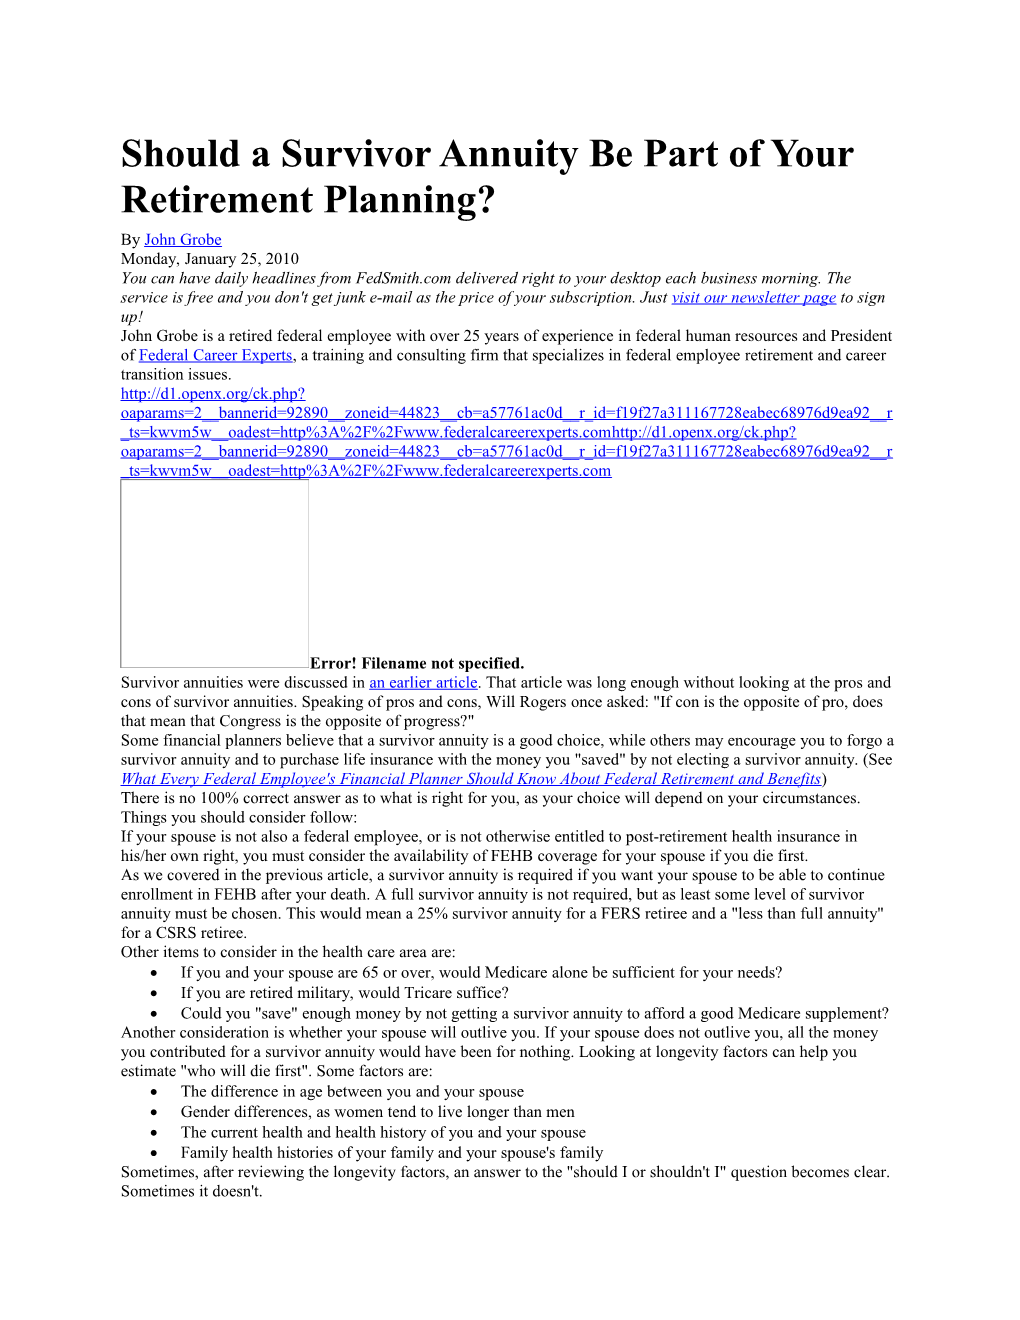 Should a Survivor Annuity Be Part of Your Retirement Planning